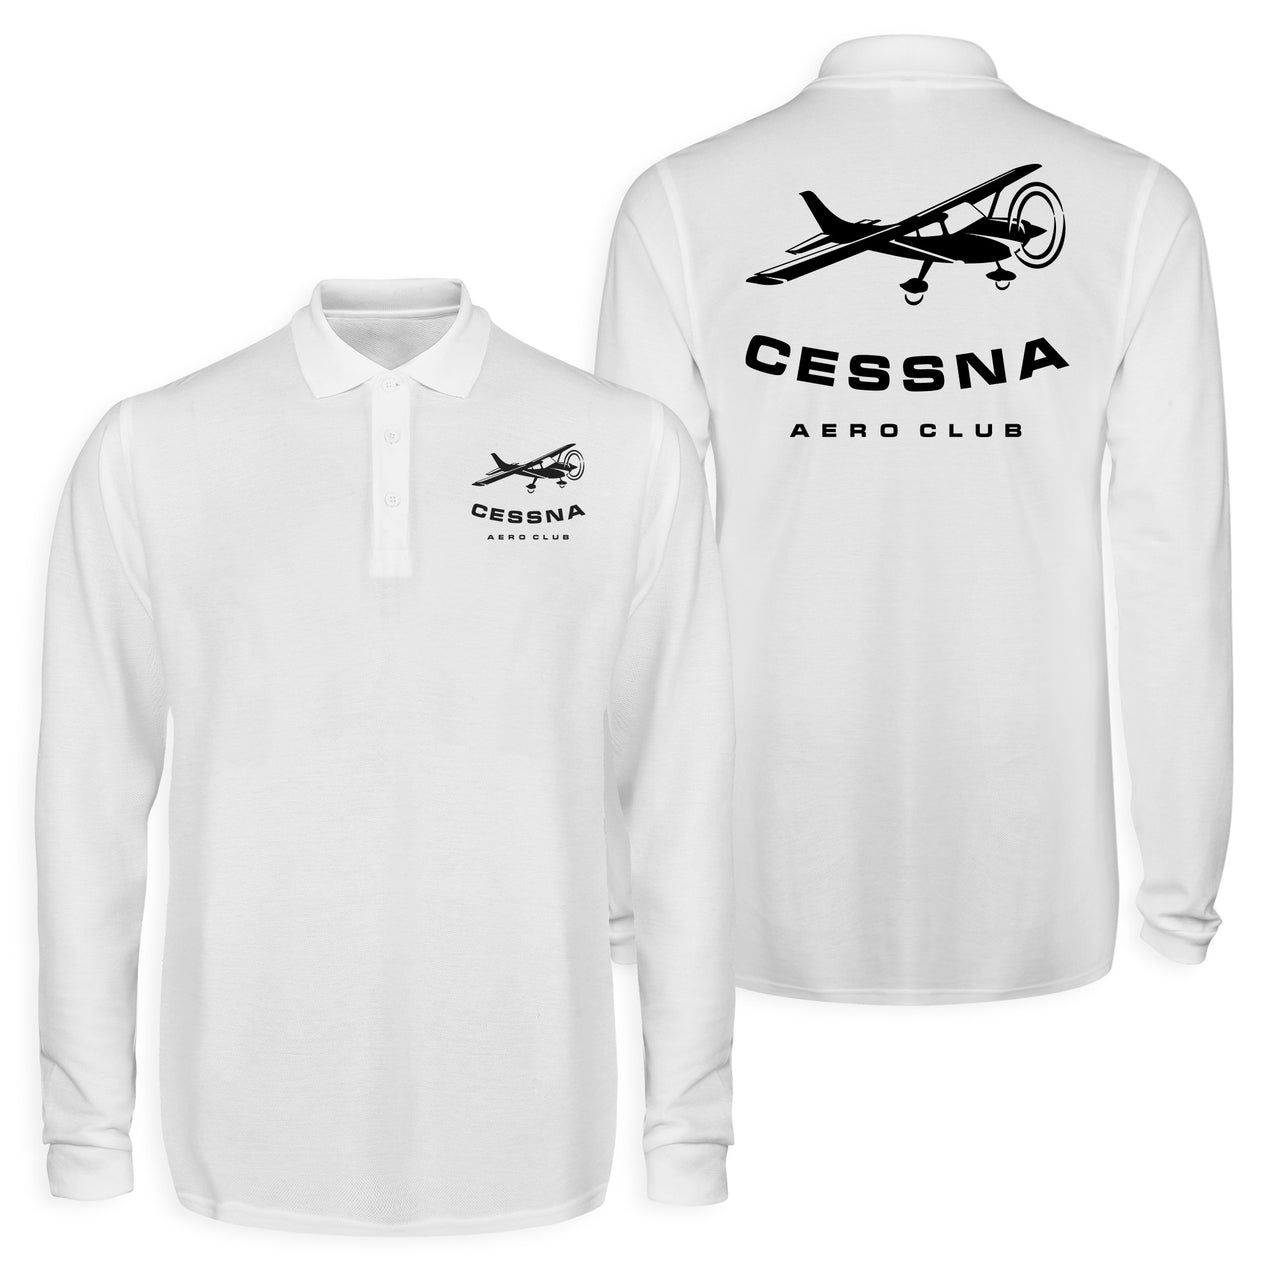 Cessna Aeroclub Designed Long Sleeve Polo T-Shirts (Double-Side)